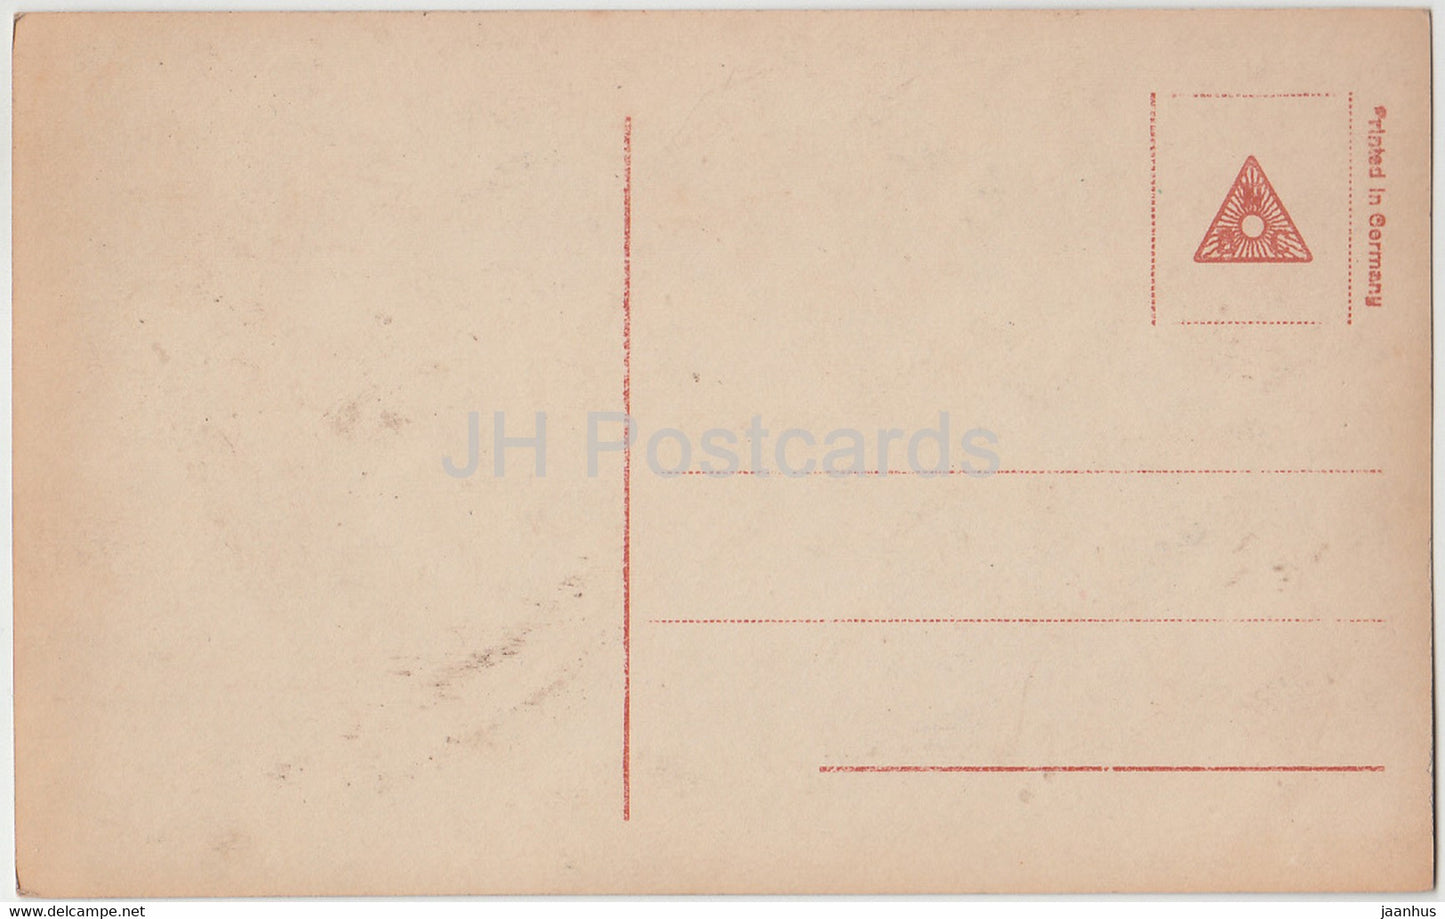 New Year Greeting Card - Prosit Neujahr - man - PFB 2980/3 - old postcard - Germany - unused